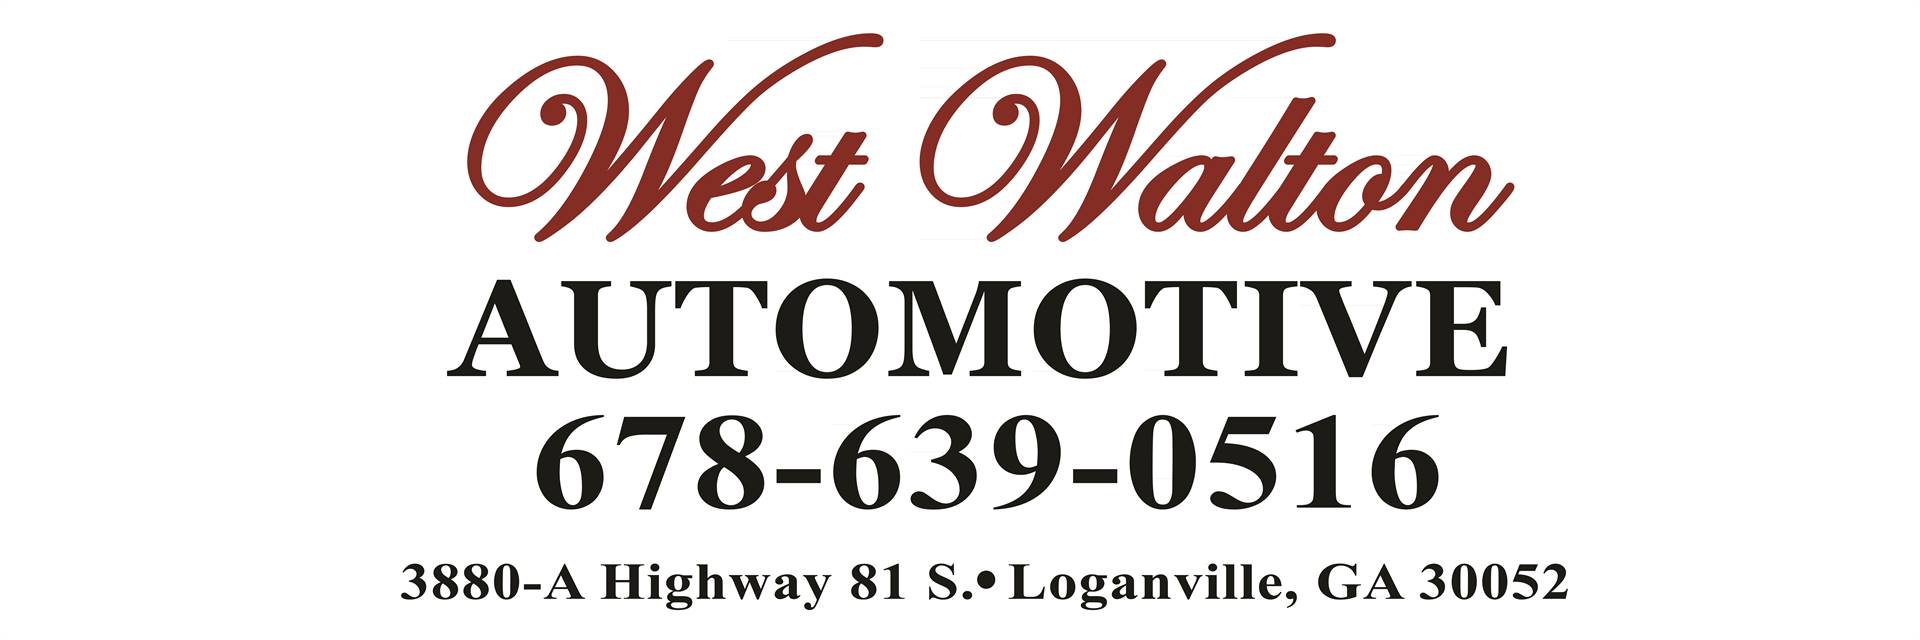 West Walton Automotive